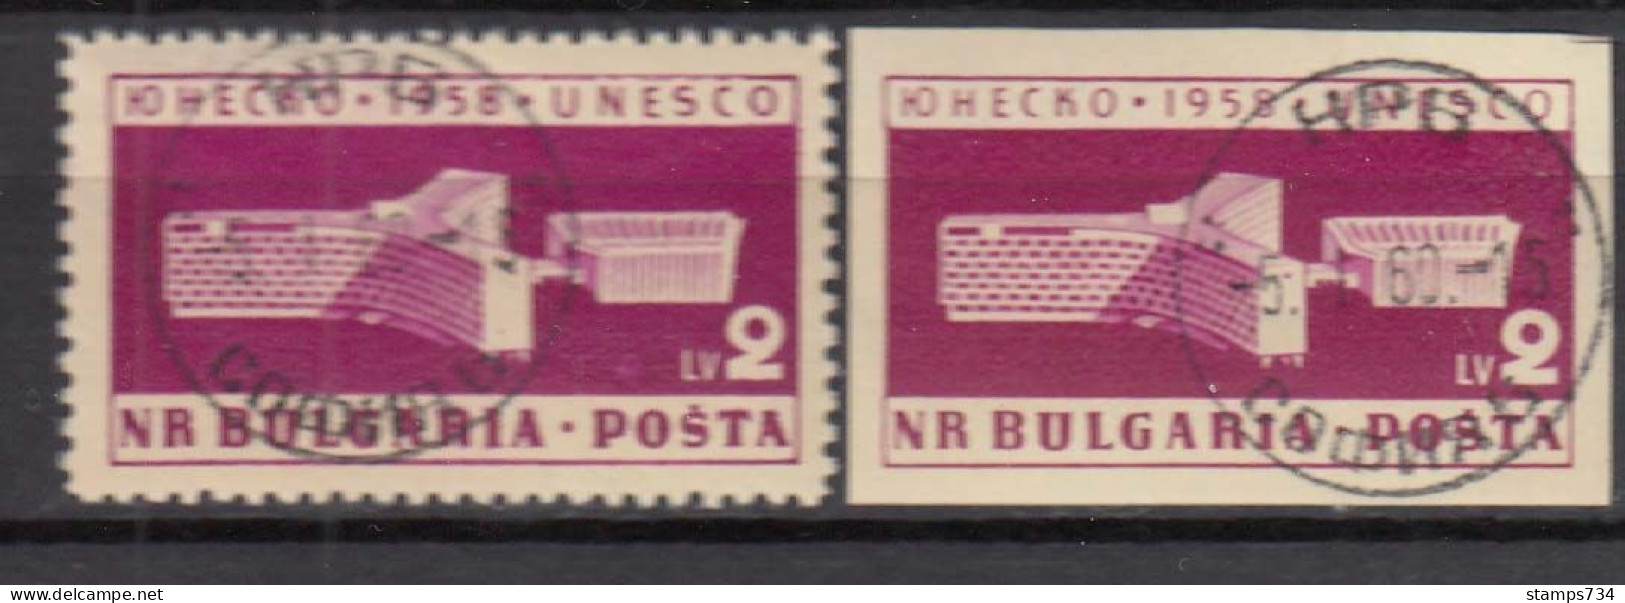 Bulgaria 1959 - UNESCO, Mi-Nr. 1103 A+B, Used - Usados